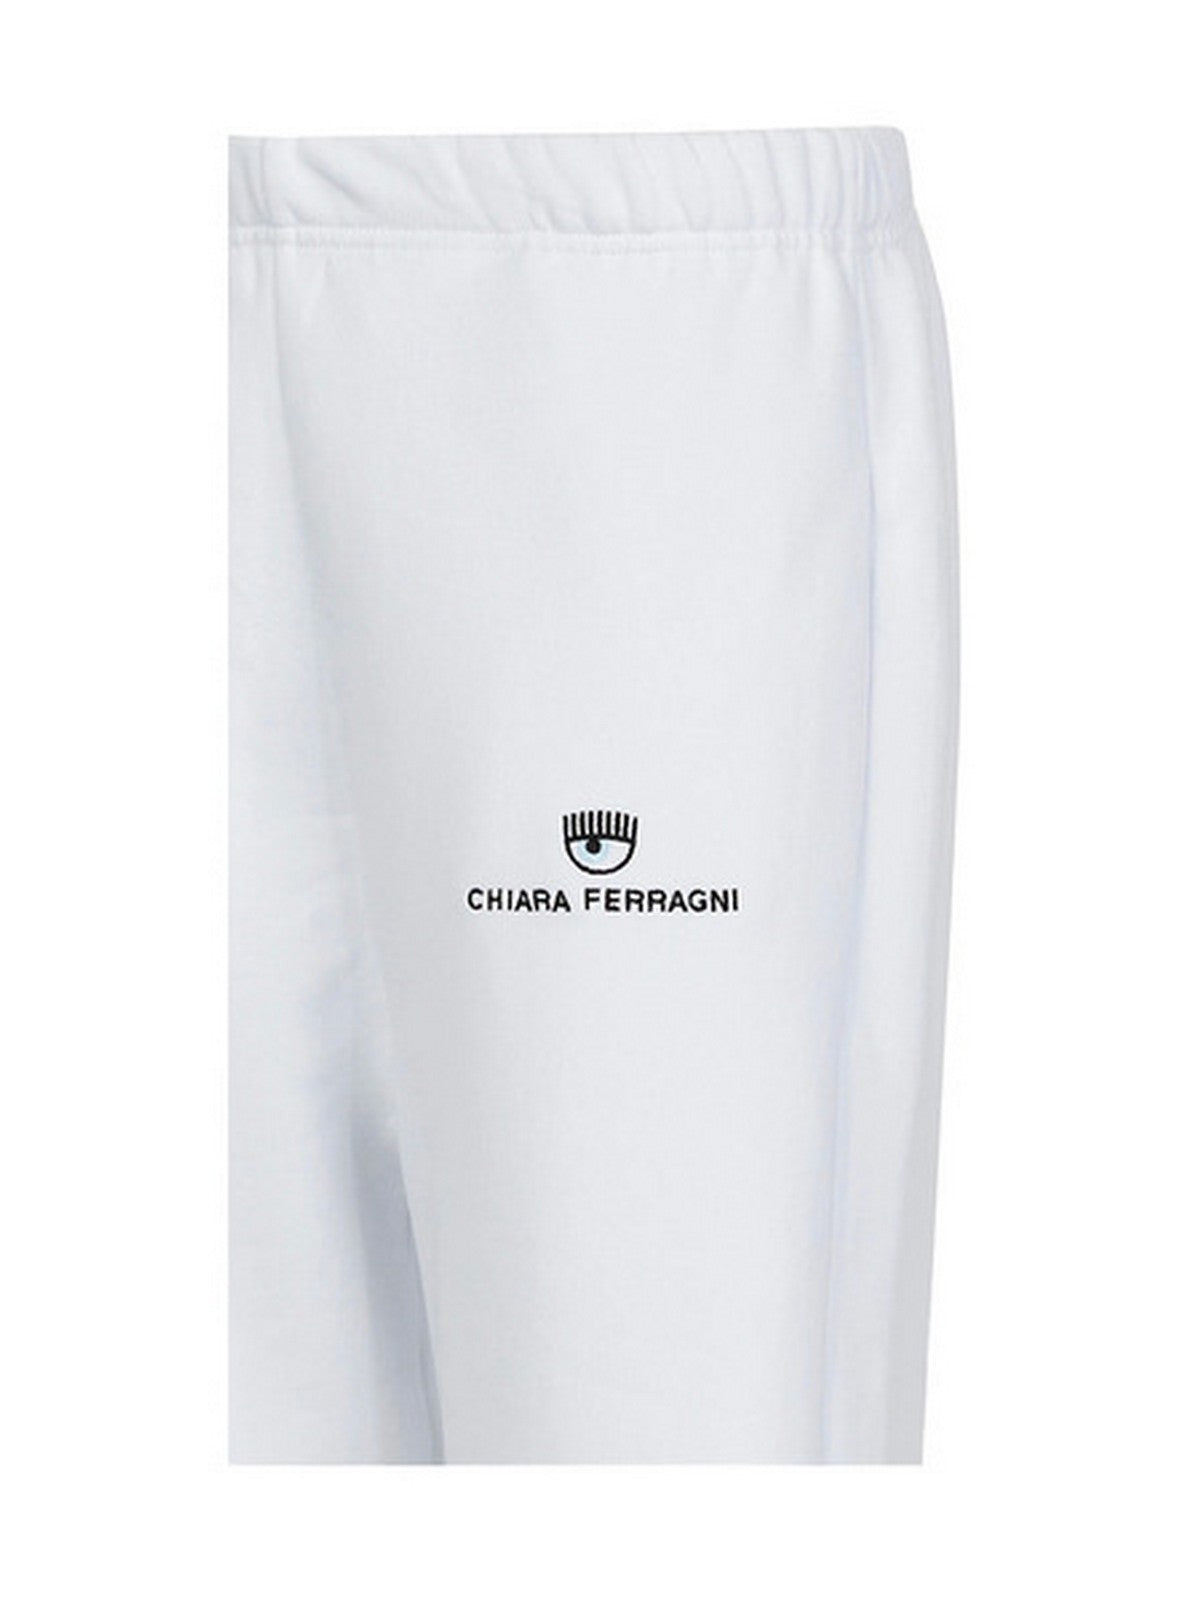 CHIARA FERRAGNI Pantalone Donna  71CBAT09 CFC0T 003 Bianco